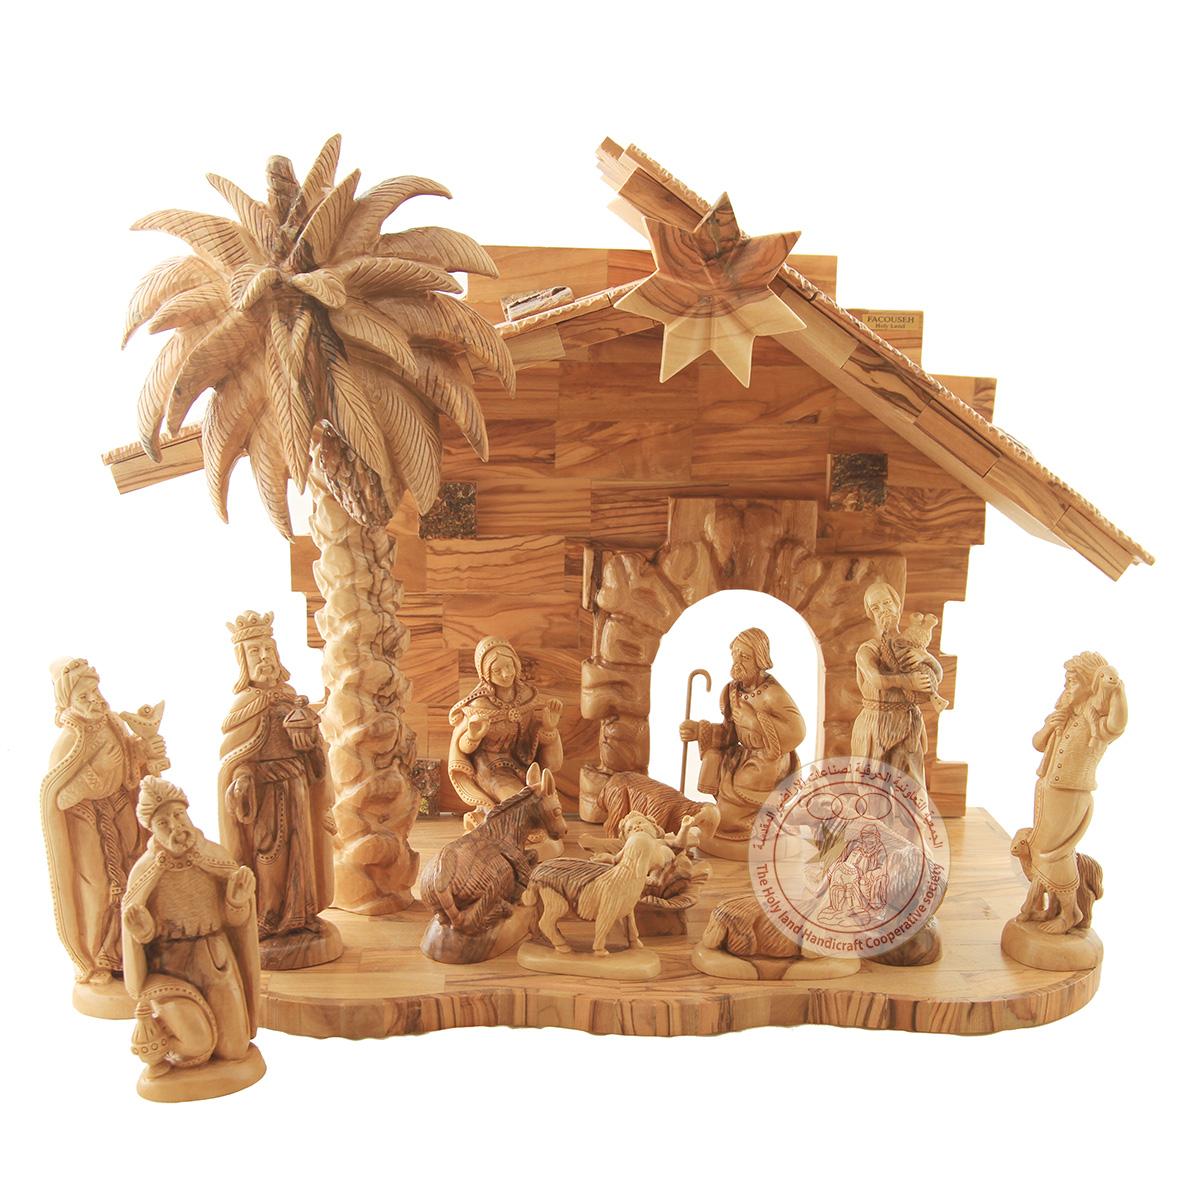 Nativity Creche Full Set - Olive Wood, Detailed Figurines